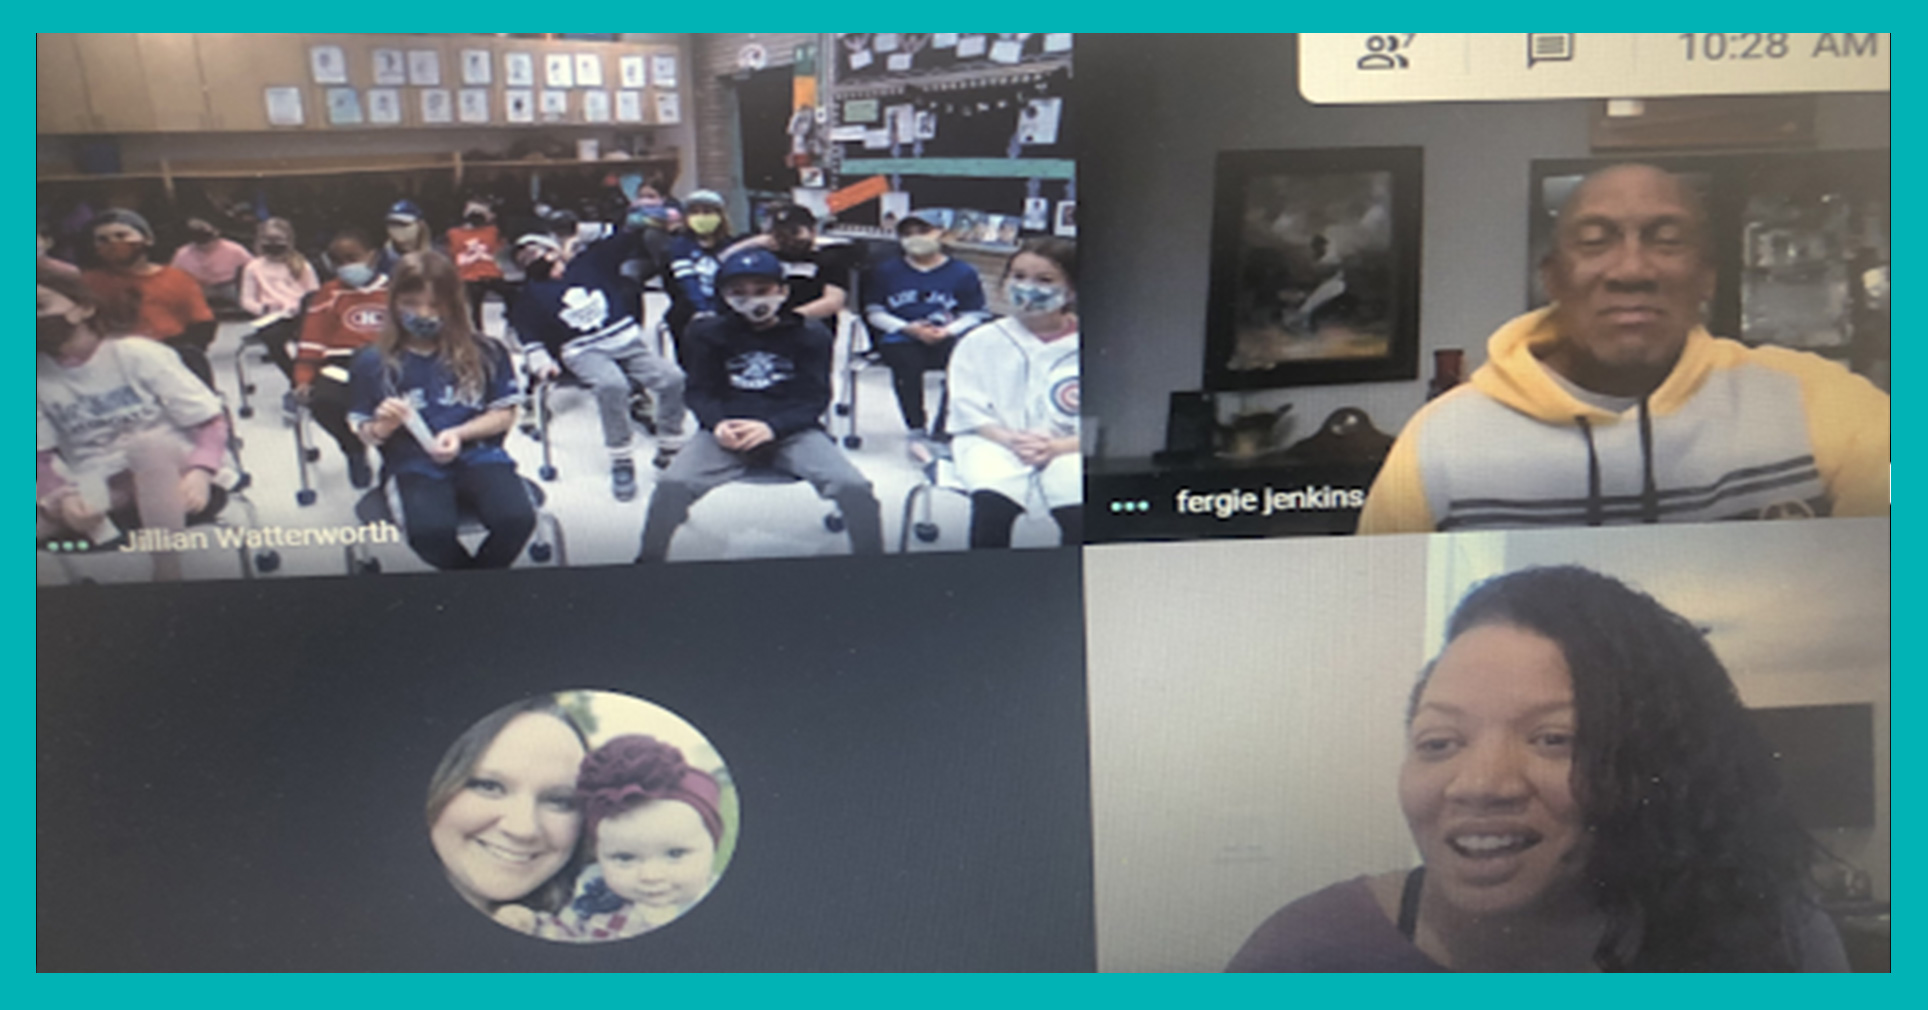 Canadian Baseball Star Fergie Jenkins Joins Georges P. Vanier Students in Virtual Meeting